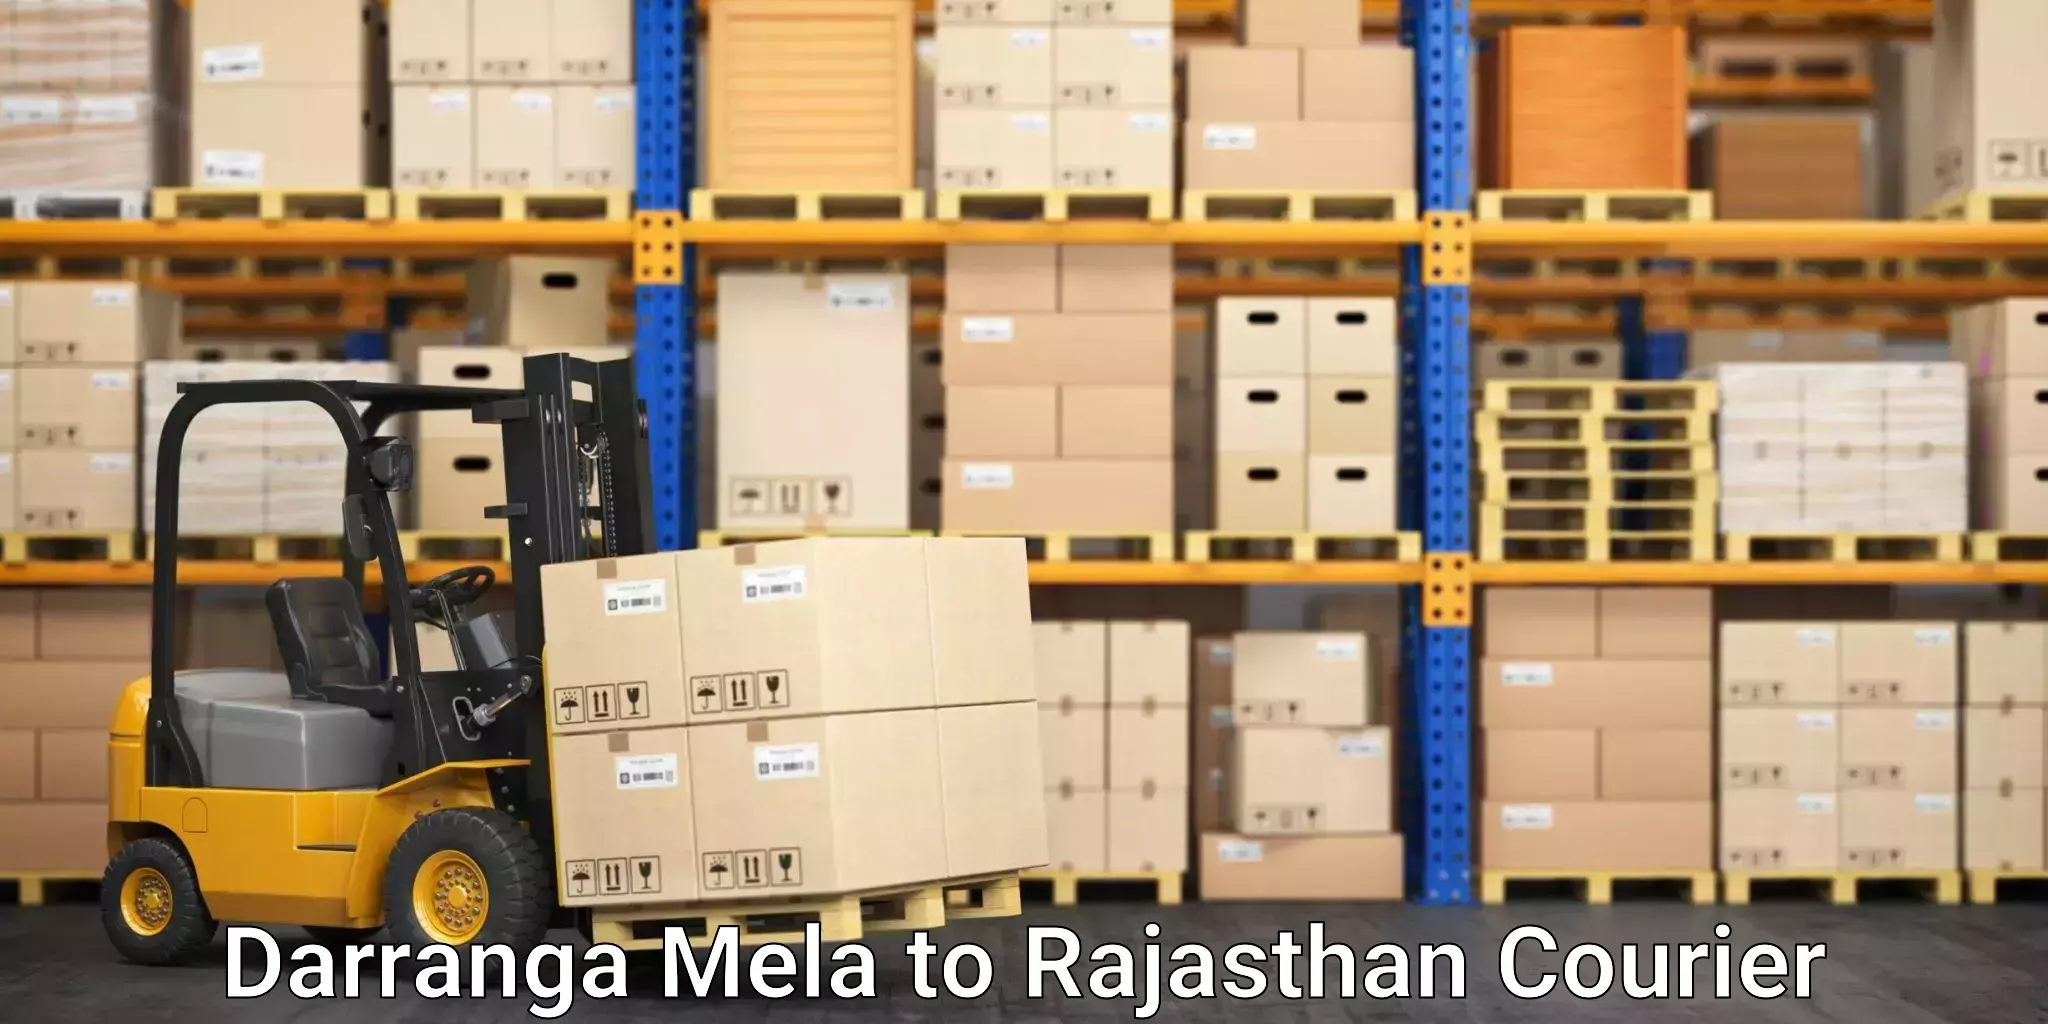 Reliable shipping partners Darranga Mela to Birla Institute of Technology and Science Pilani